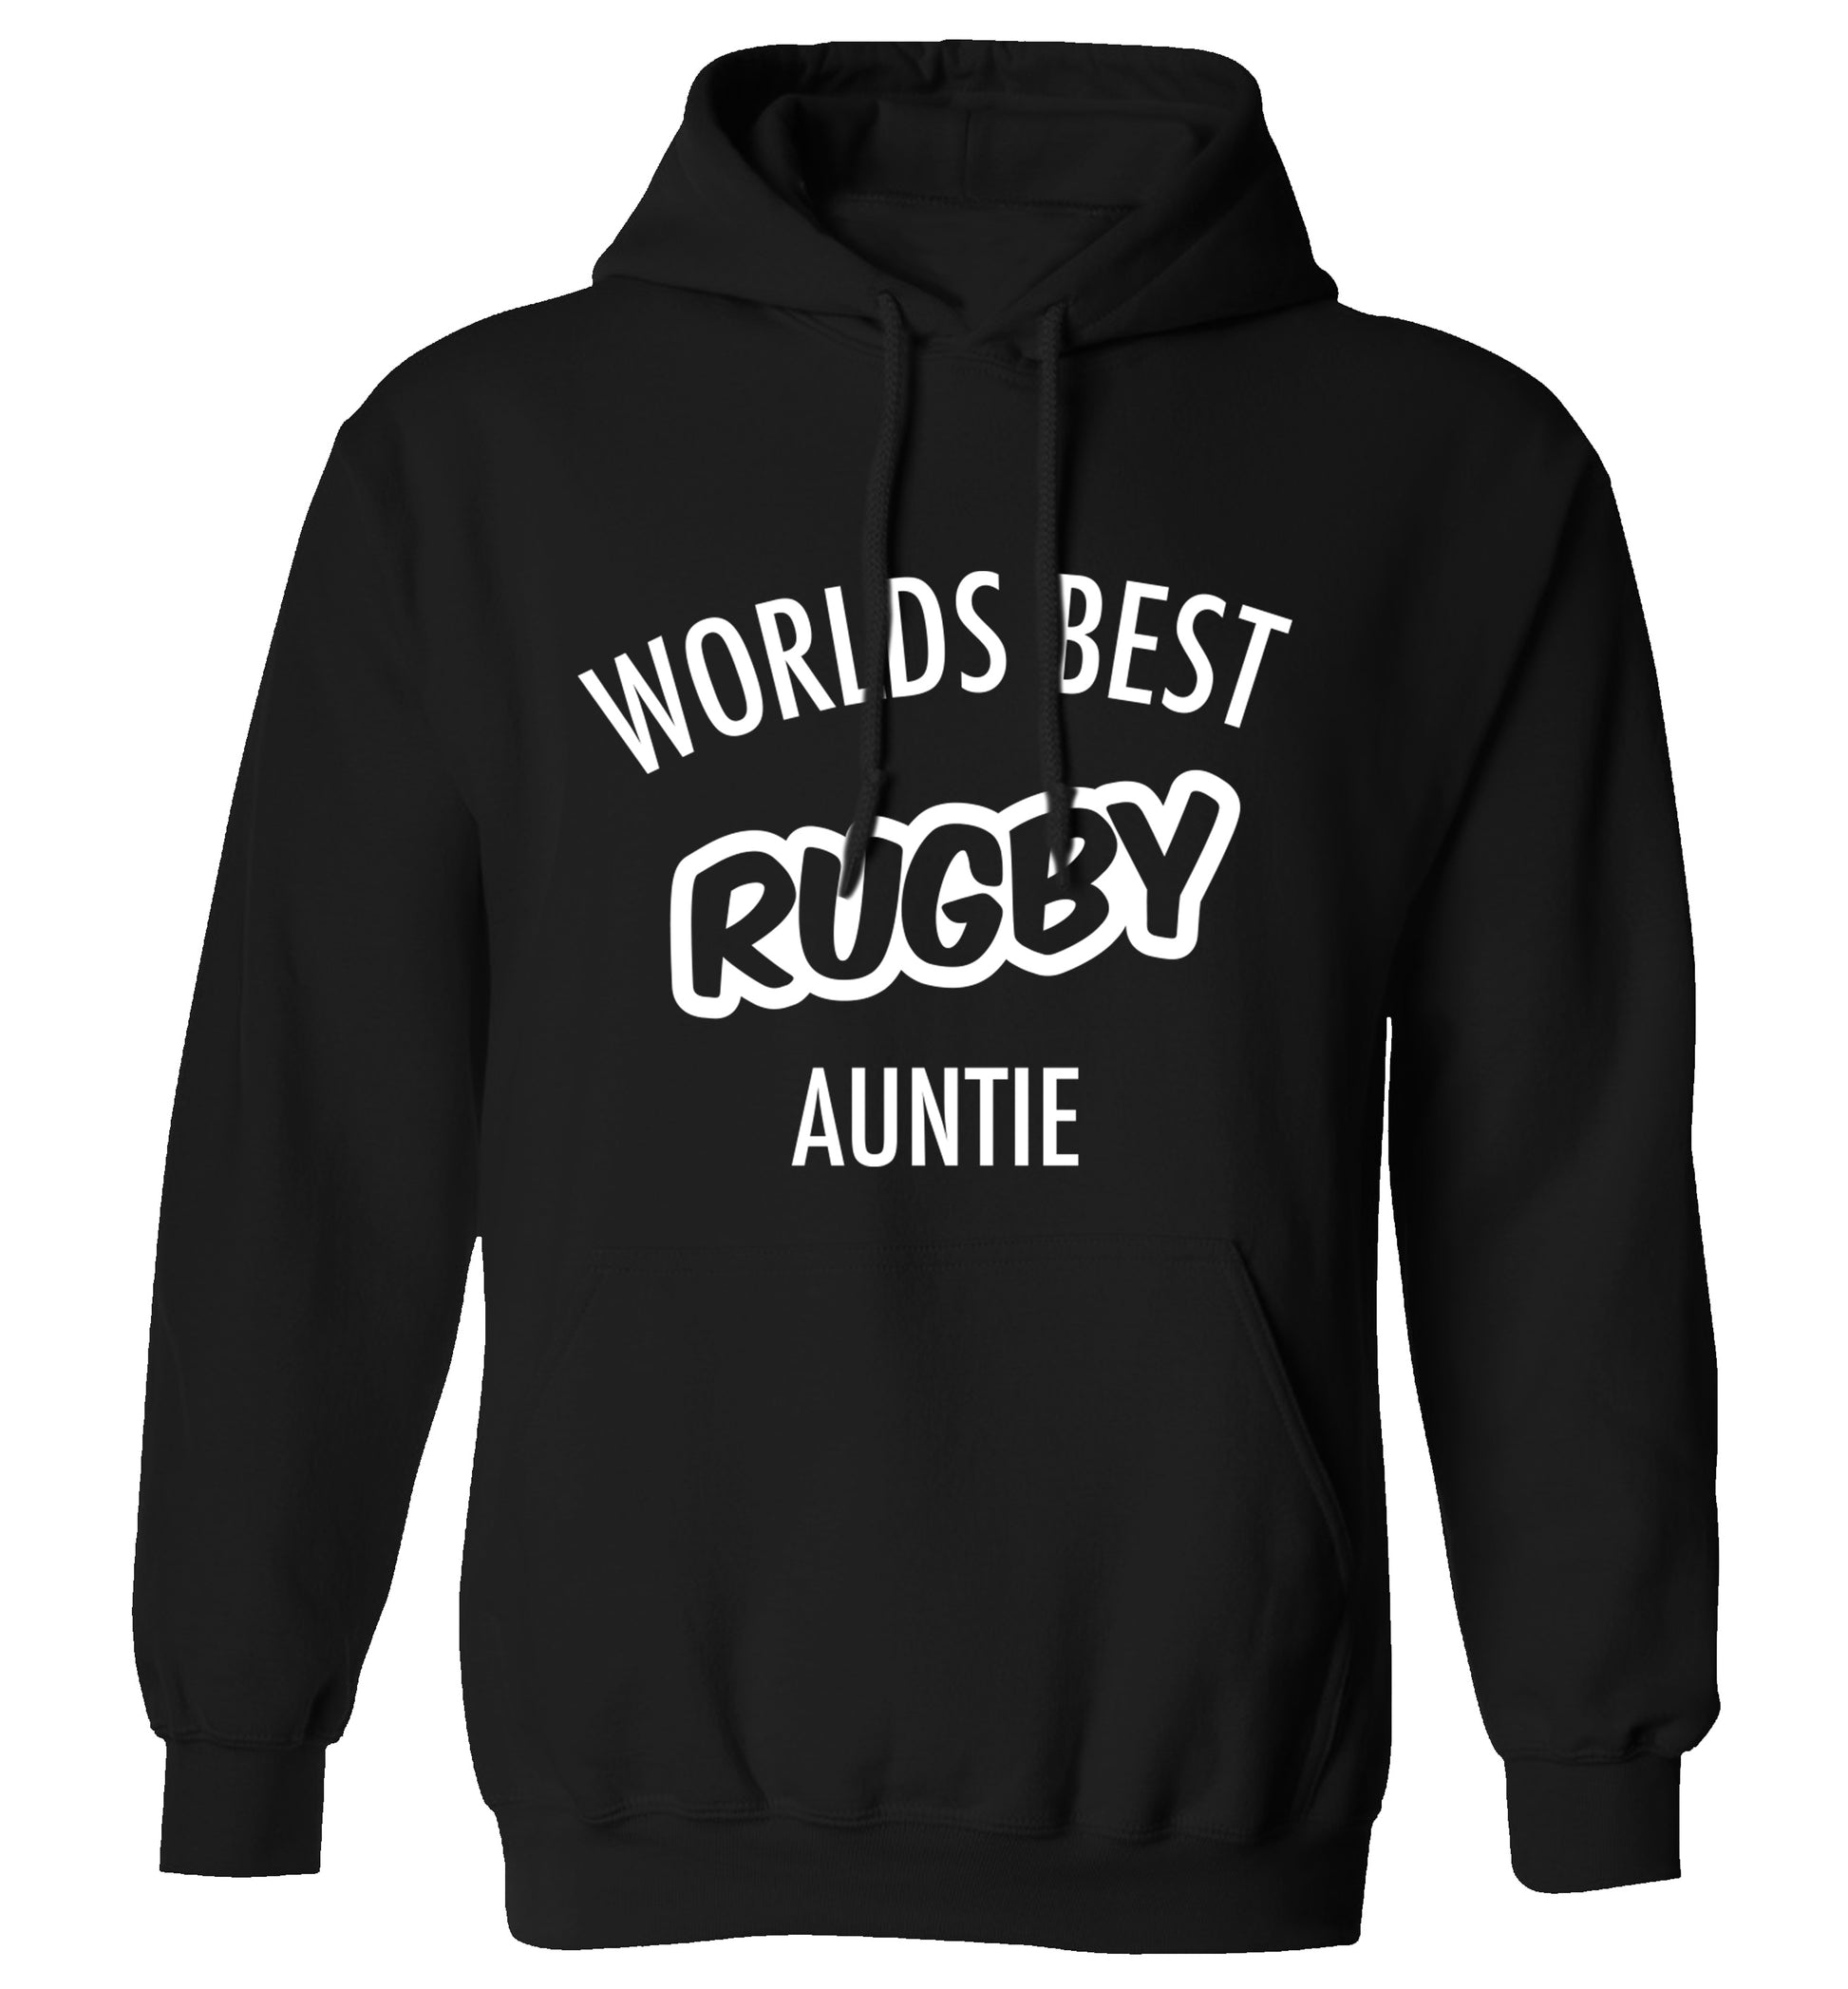 Worlds best rugby auntie adults unisex black hoodie 2XL